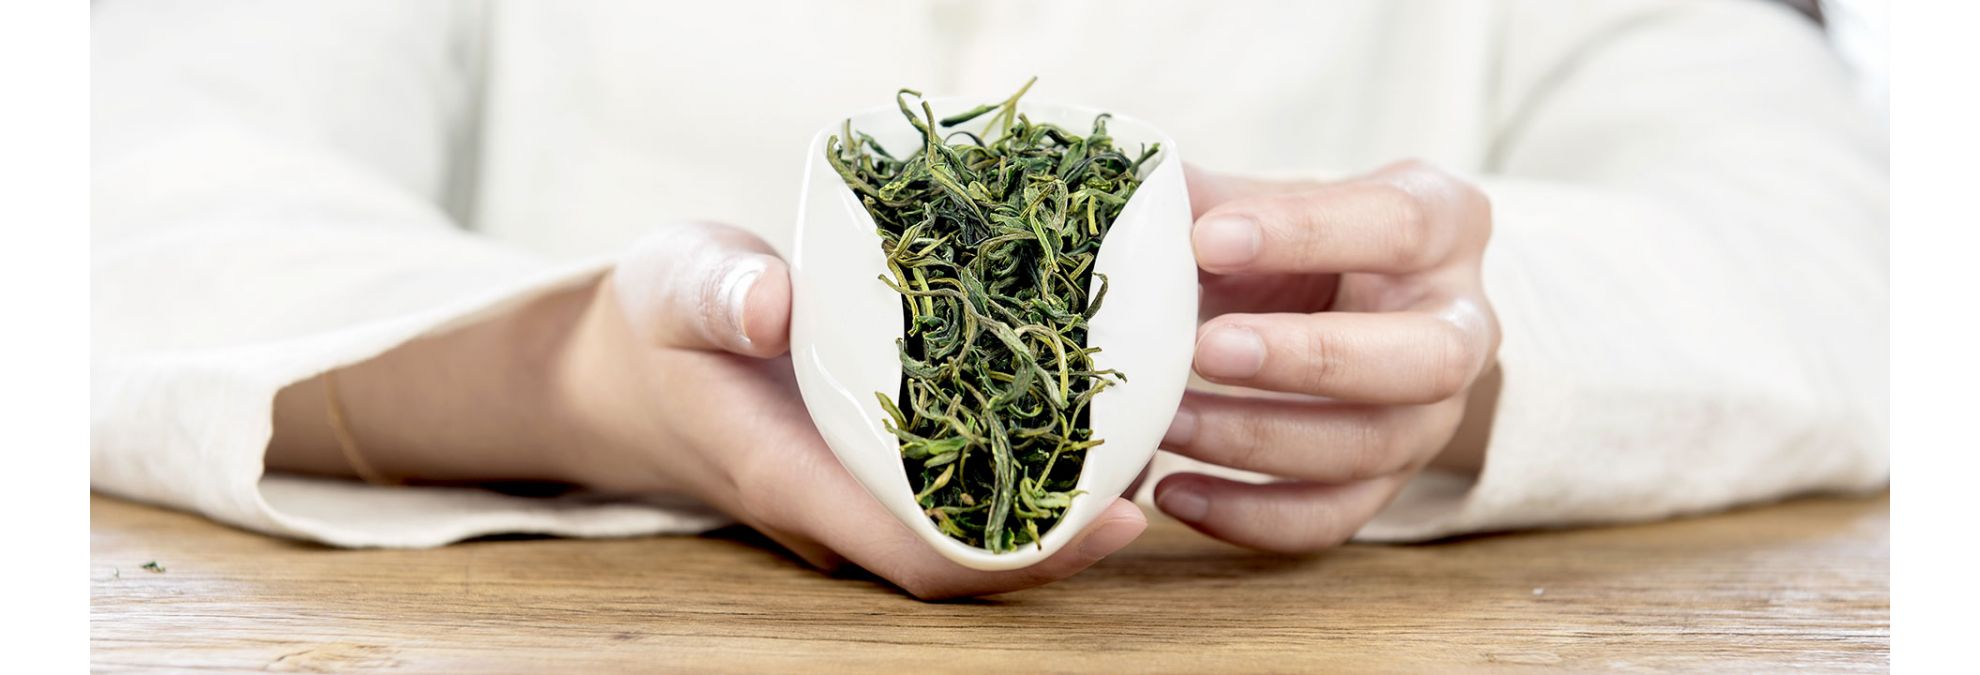 Buy Green Tea Tree Seeds Plant Green Tea For Huang Shan Mao Feng New 2019